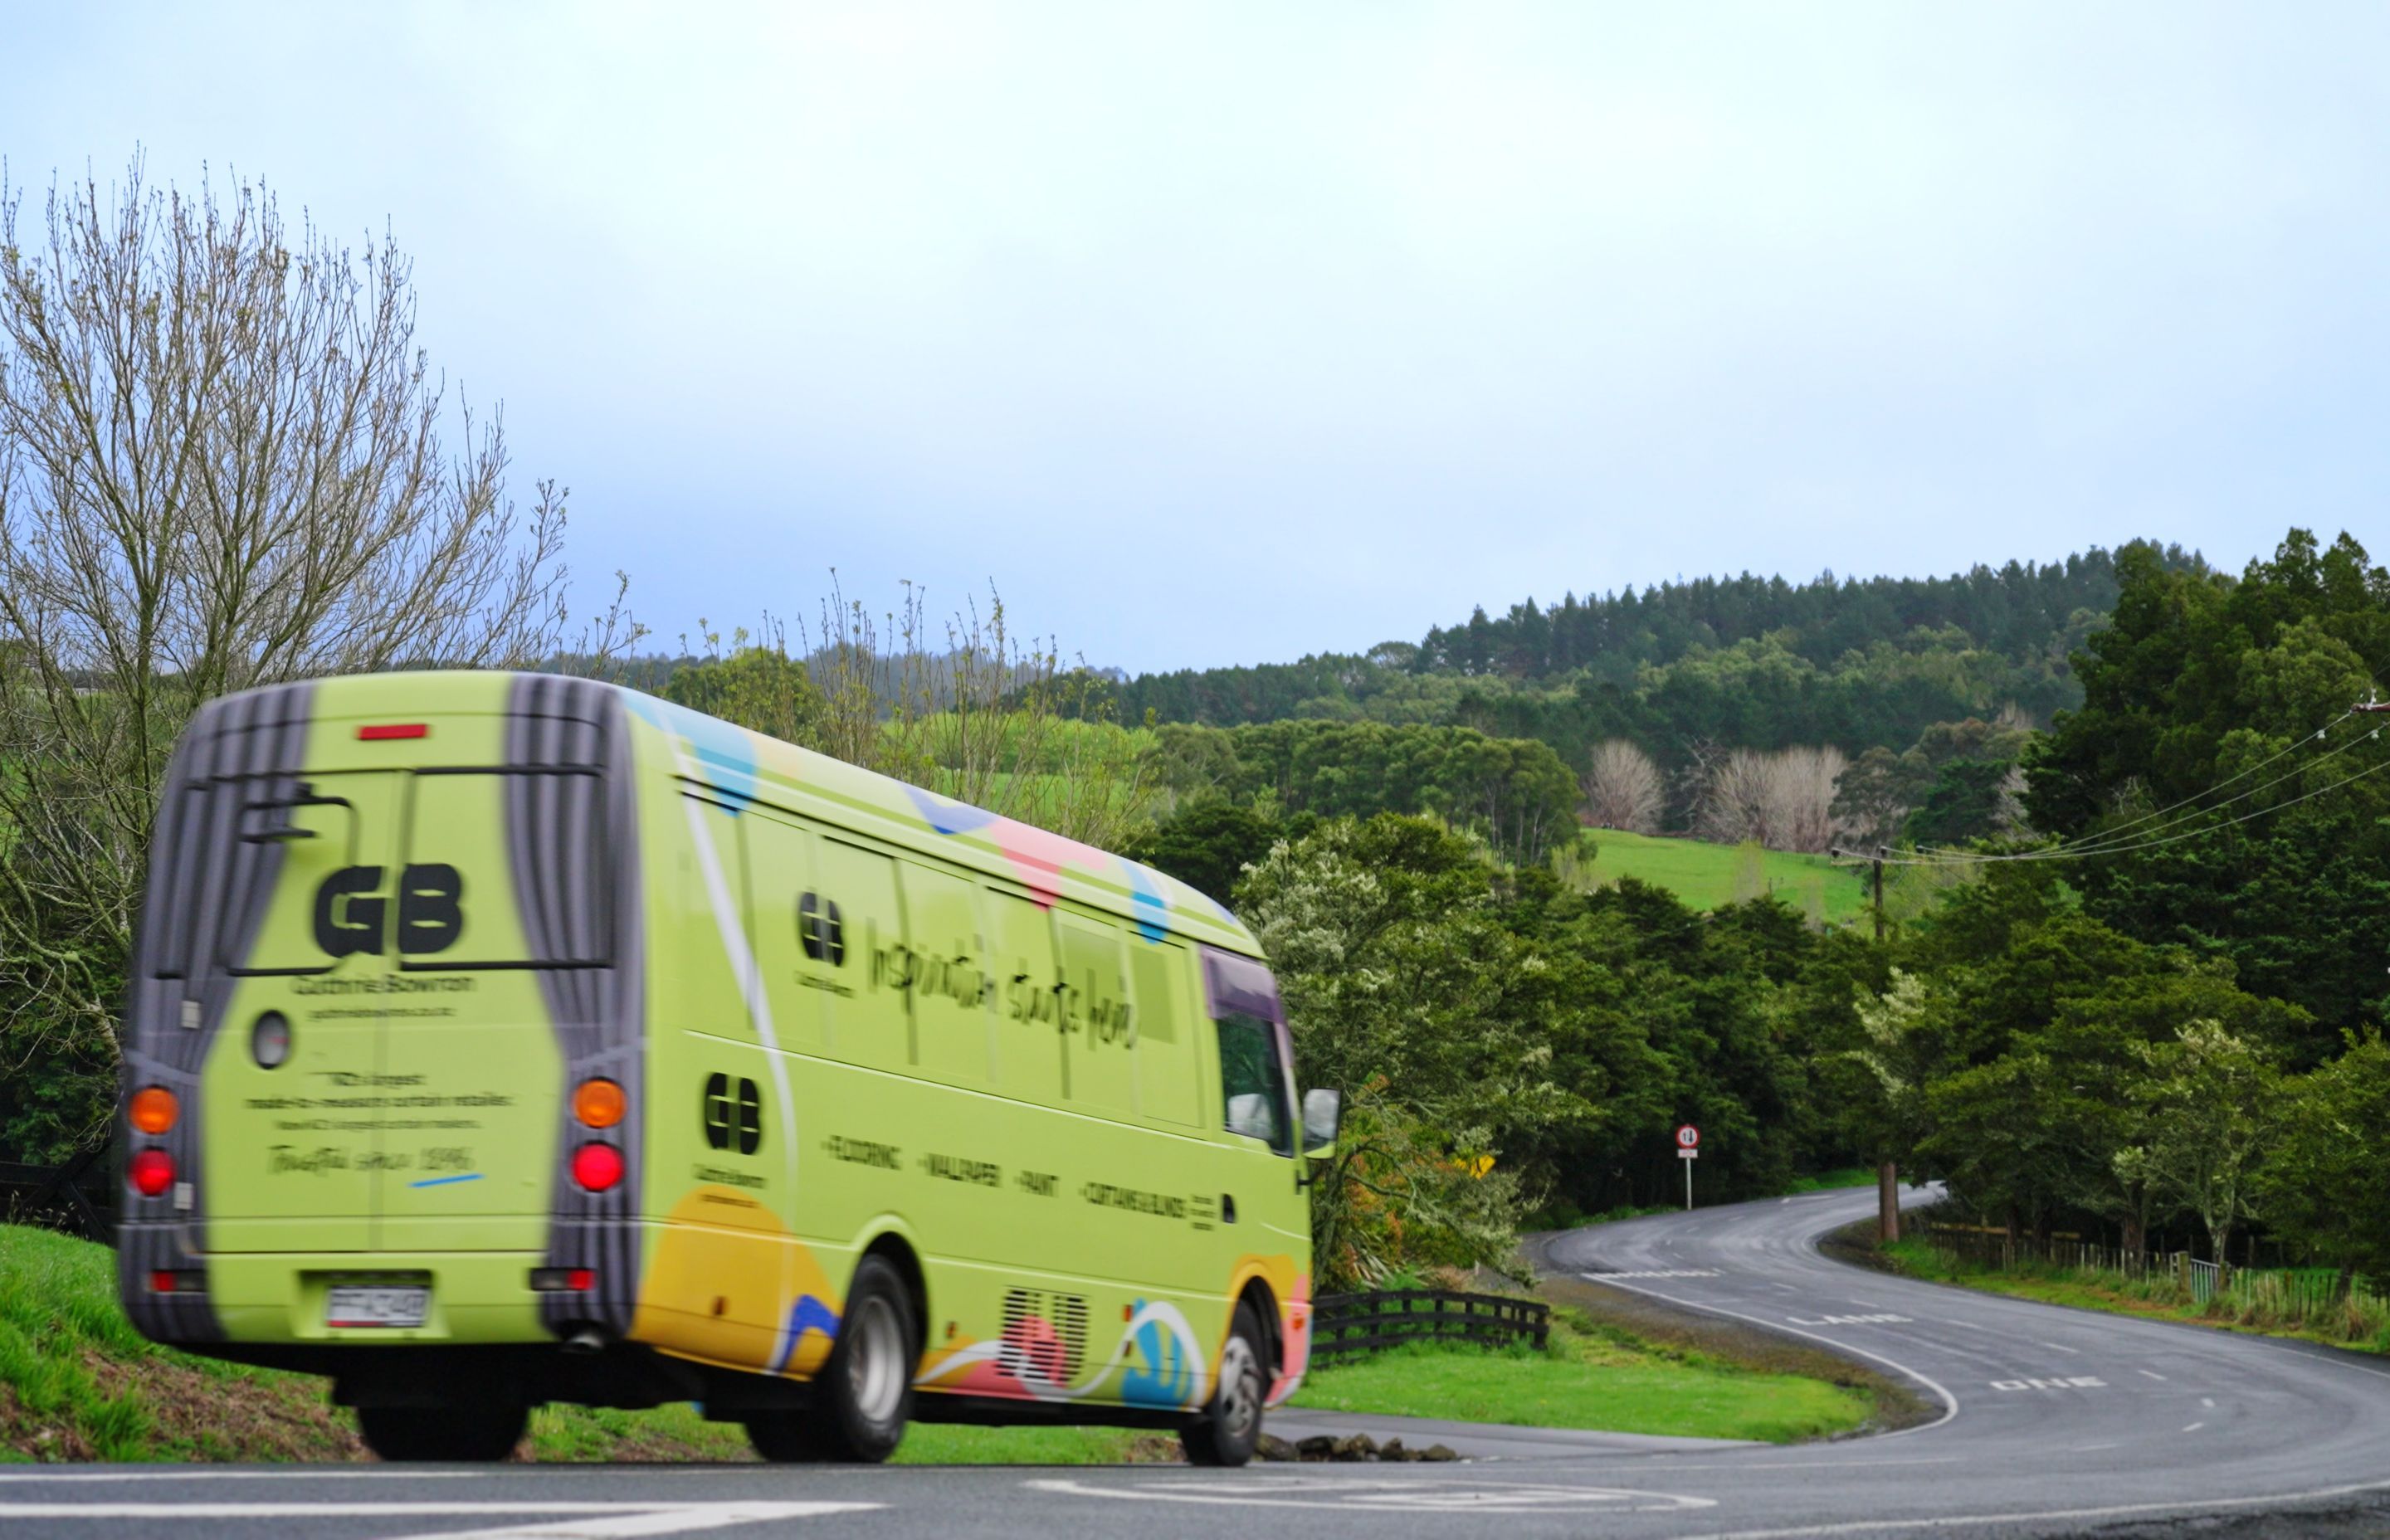 The GB "Inspo Roadie" Bus Design Journey